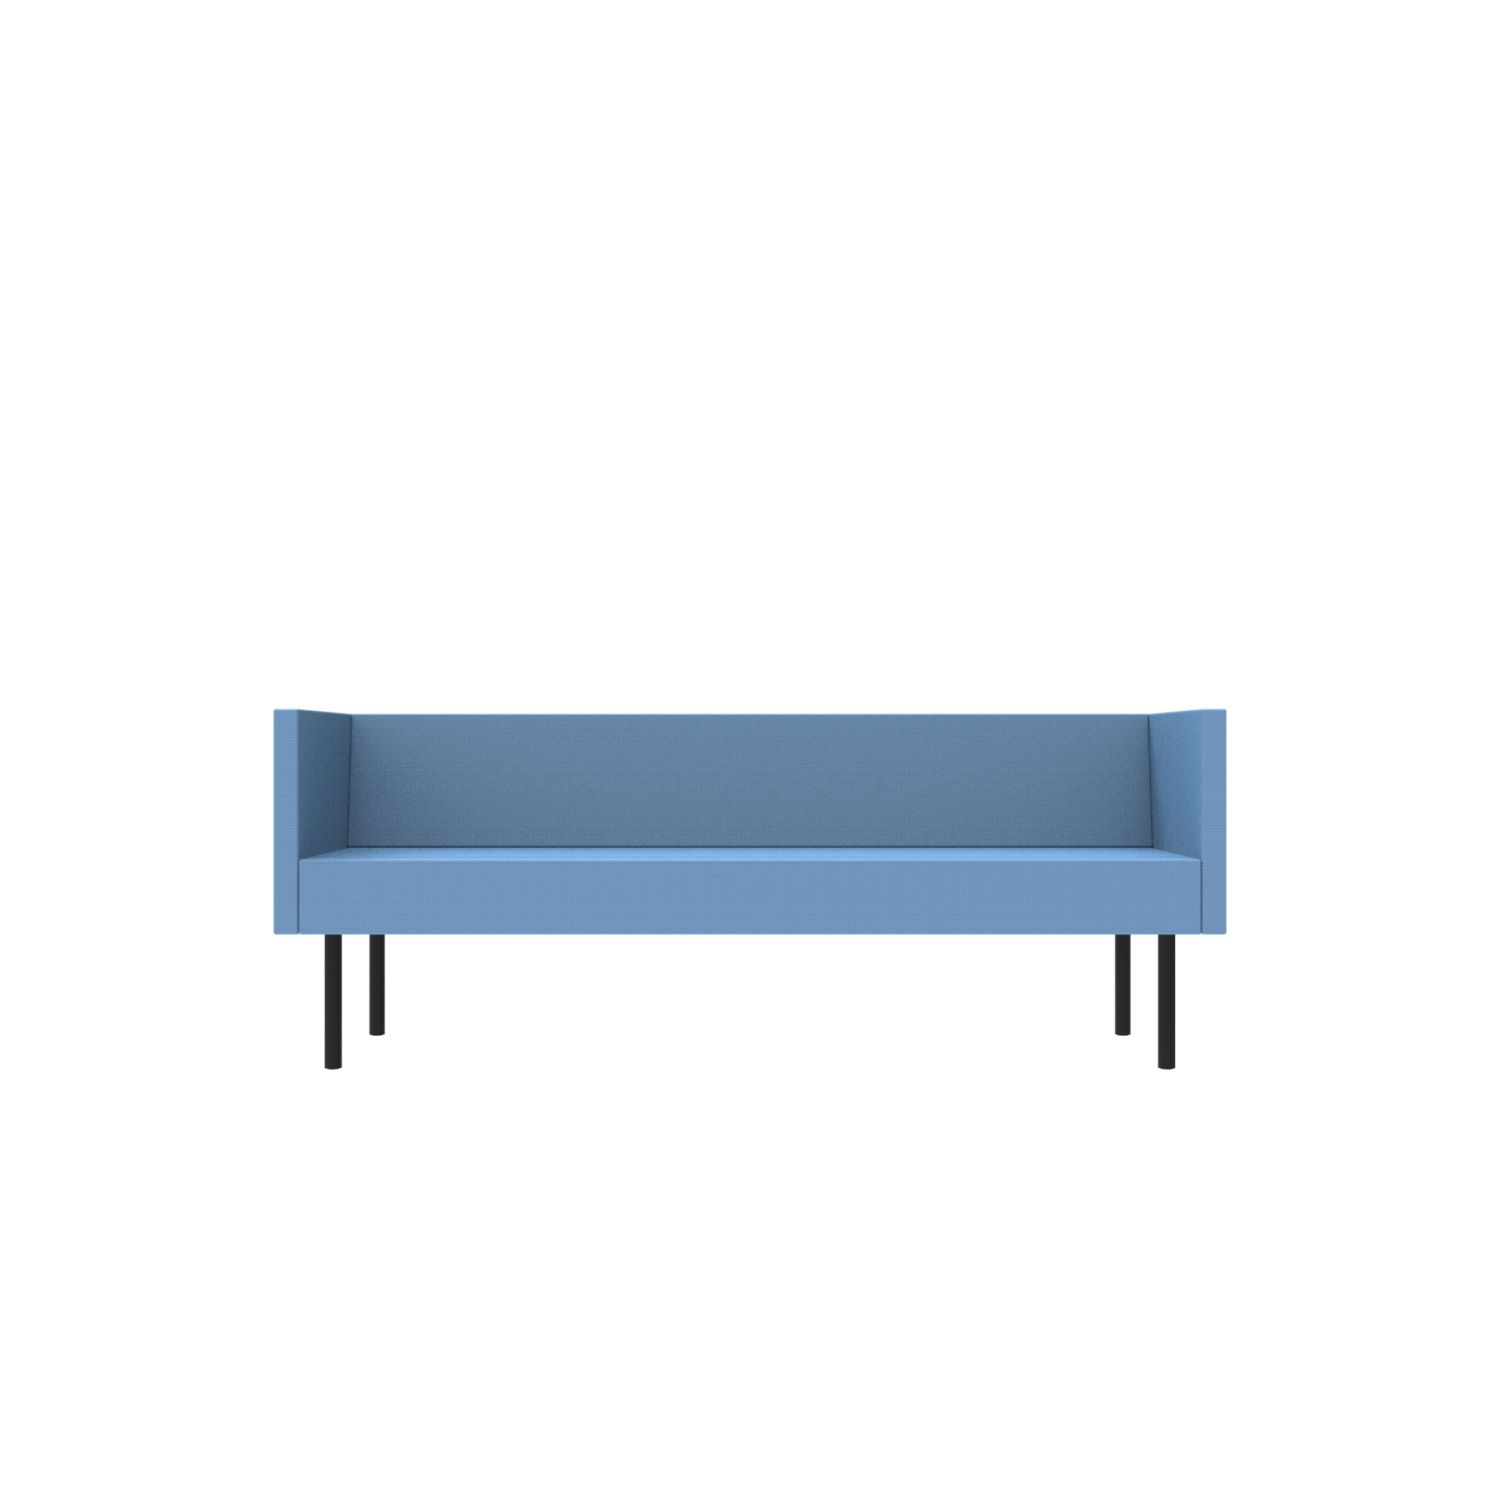 lensvelt rick minkes no idea sofa low back width 198 cm depth 70 cm height 73 cm blue horizon 040 black ral9005